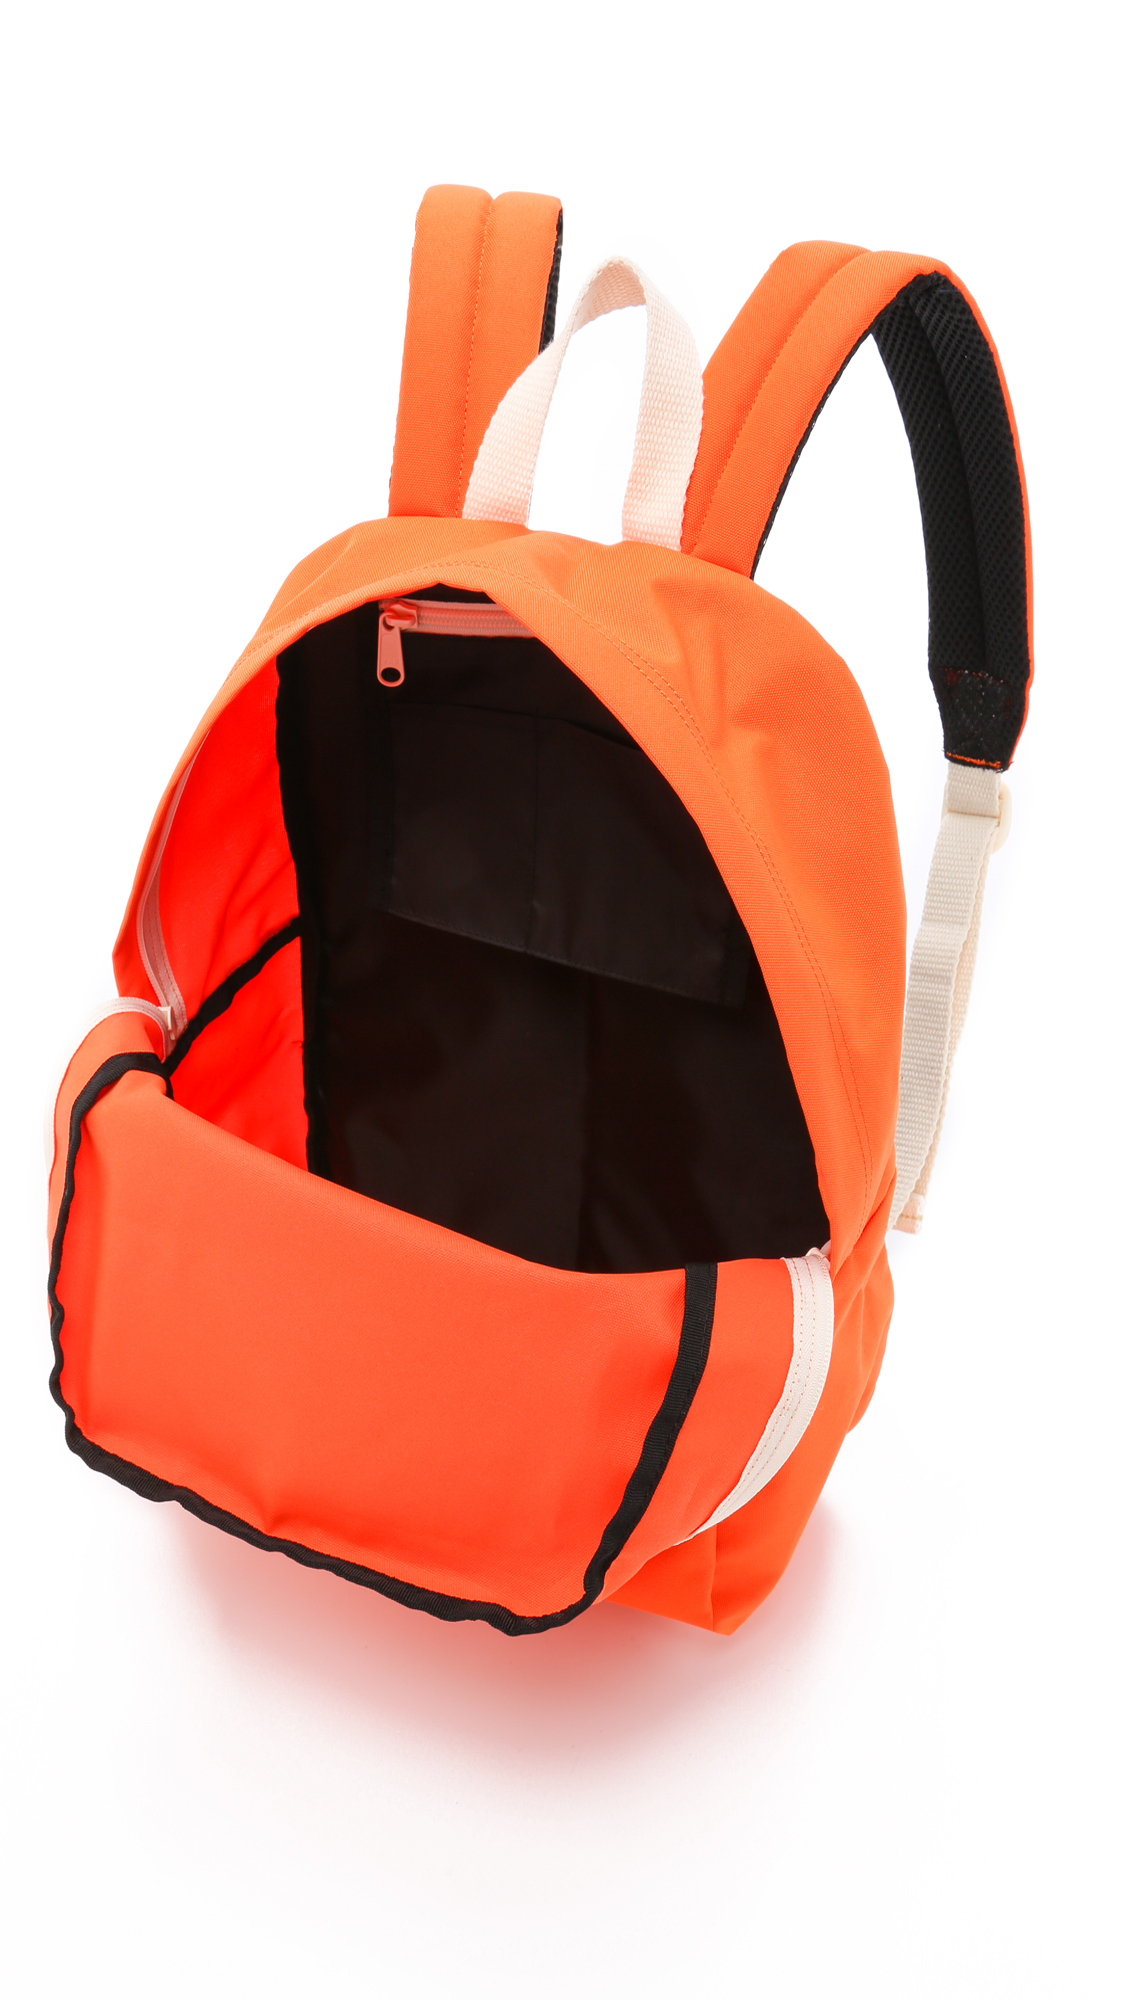 Carhartt WIP Synthetic Watch Backpack in Orange for Men - Lyst